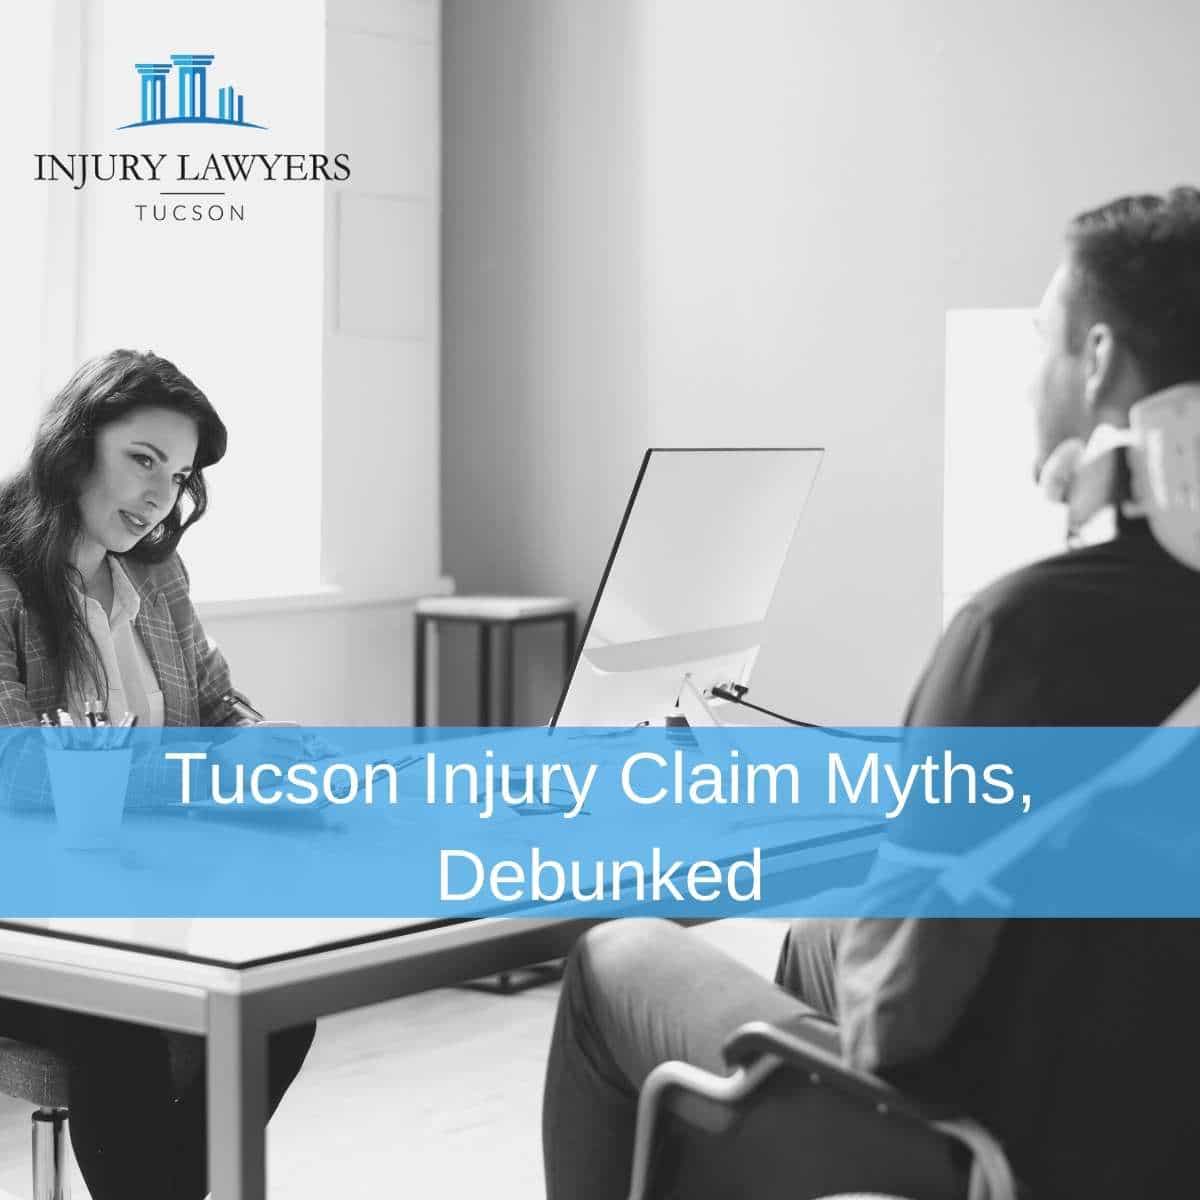 Tucson Injury Claim Myths, Debunked